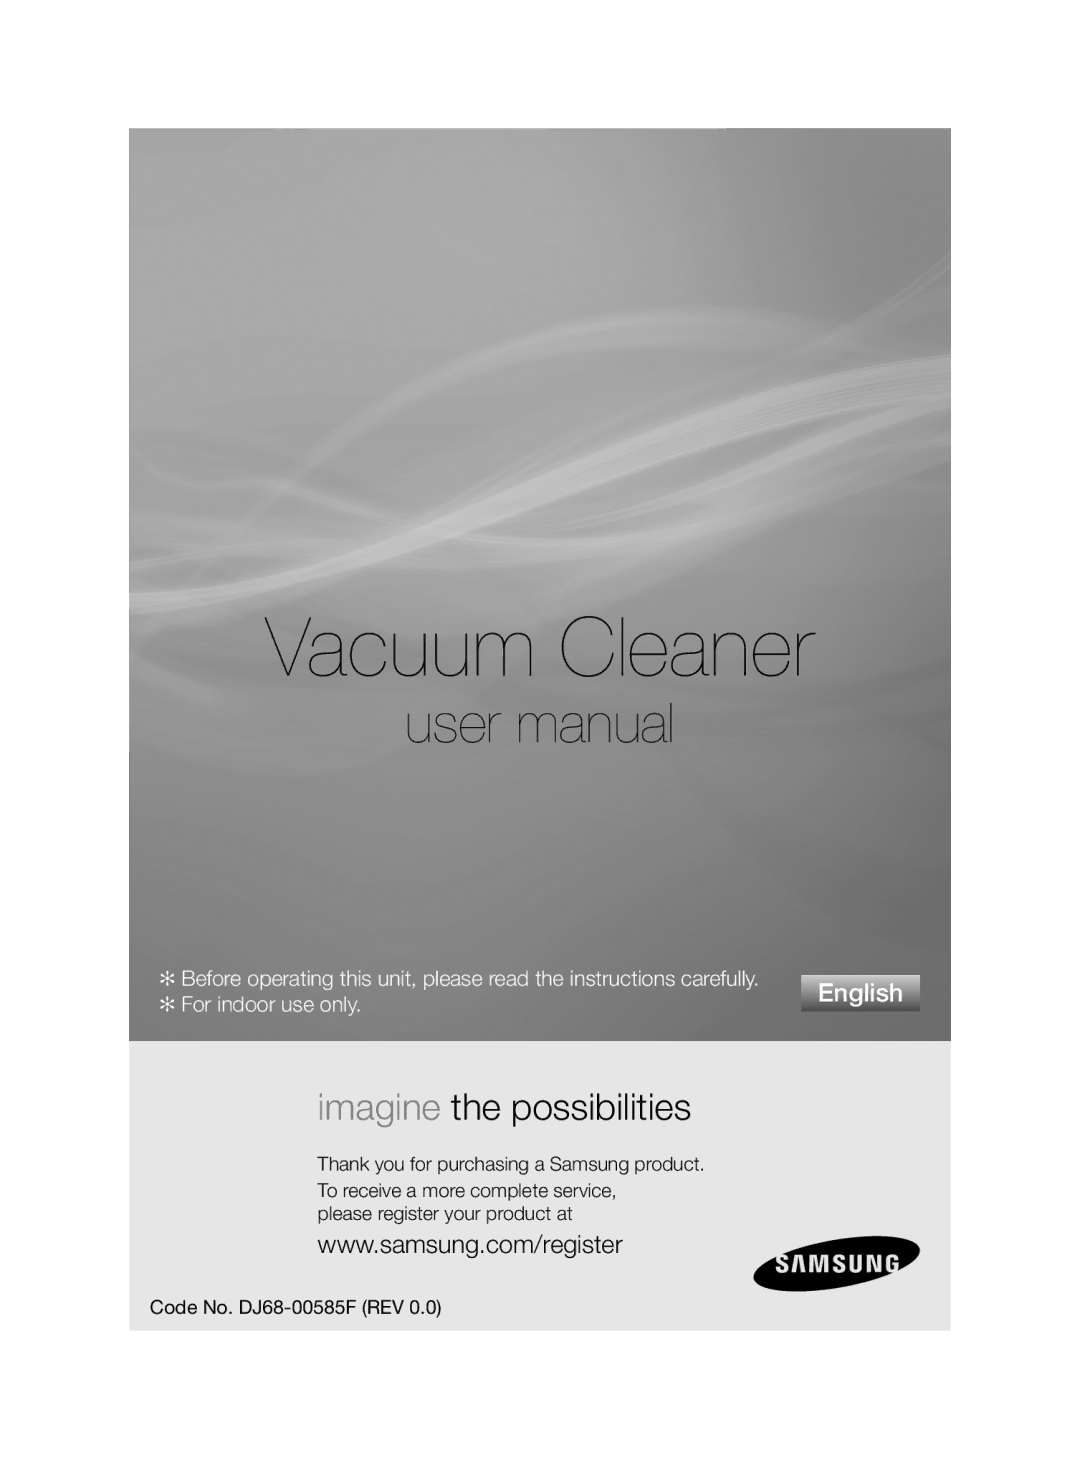 Samsung VCC5610S3R/EGT, VCC56B0S38/TWL, VCC5675V3A/KGT, VCC56B0S3R/DWP manual Vacuum Cleaner, Imagine the possibilities 